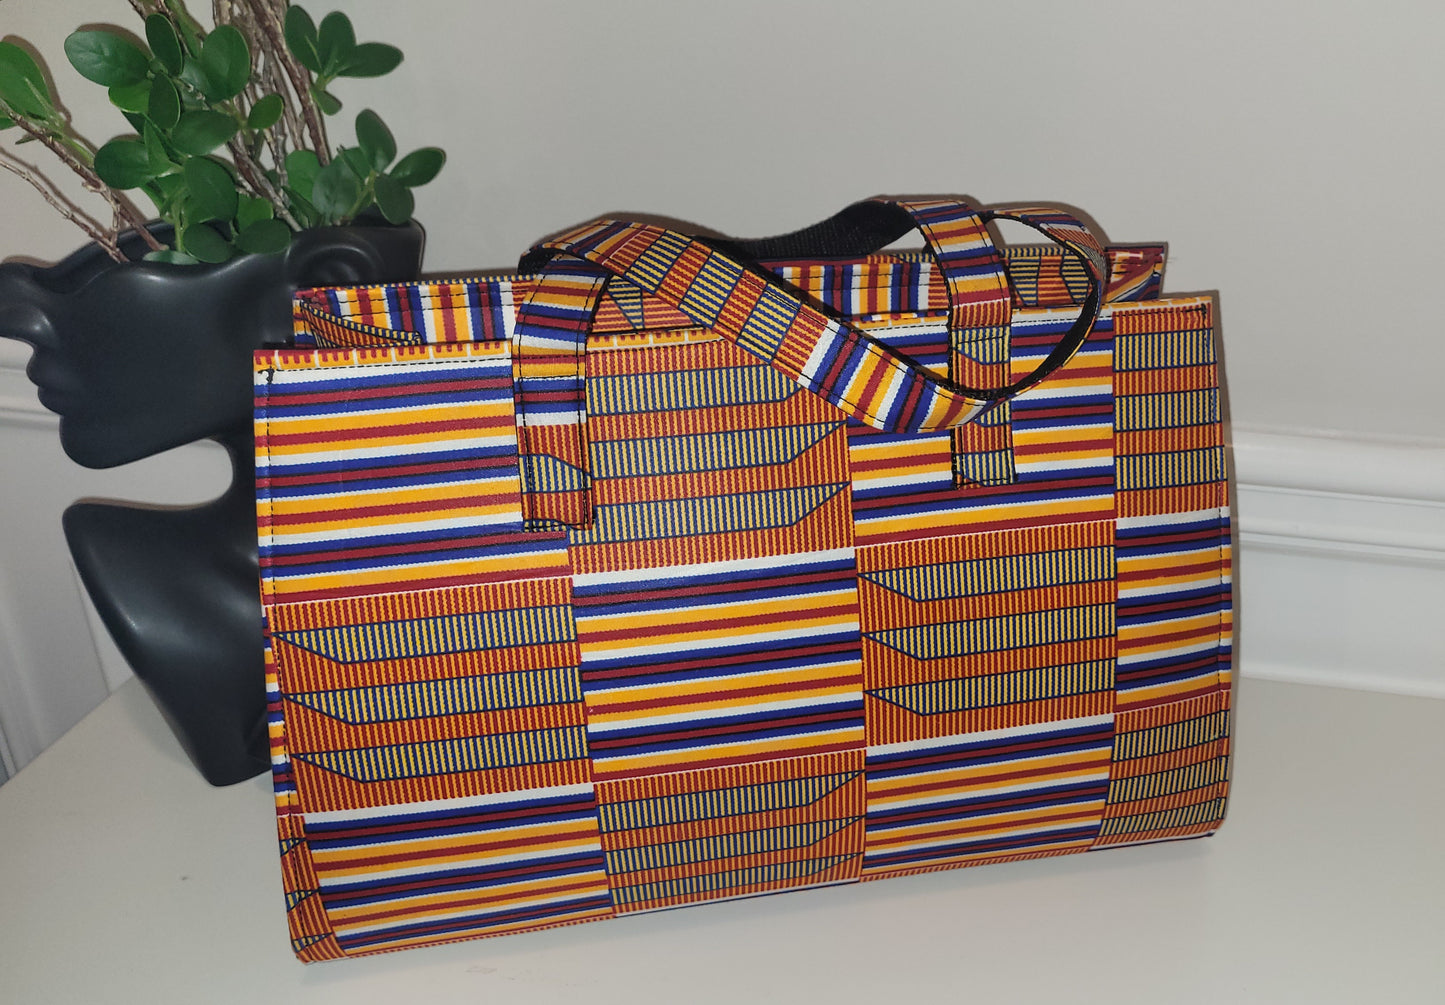 The Marie - Ghana Handbag Collection